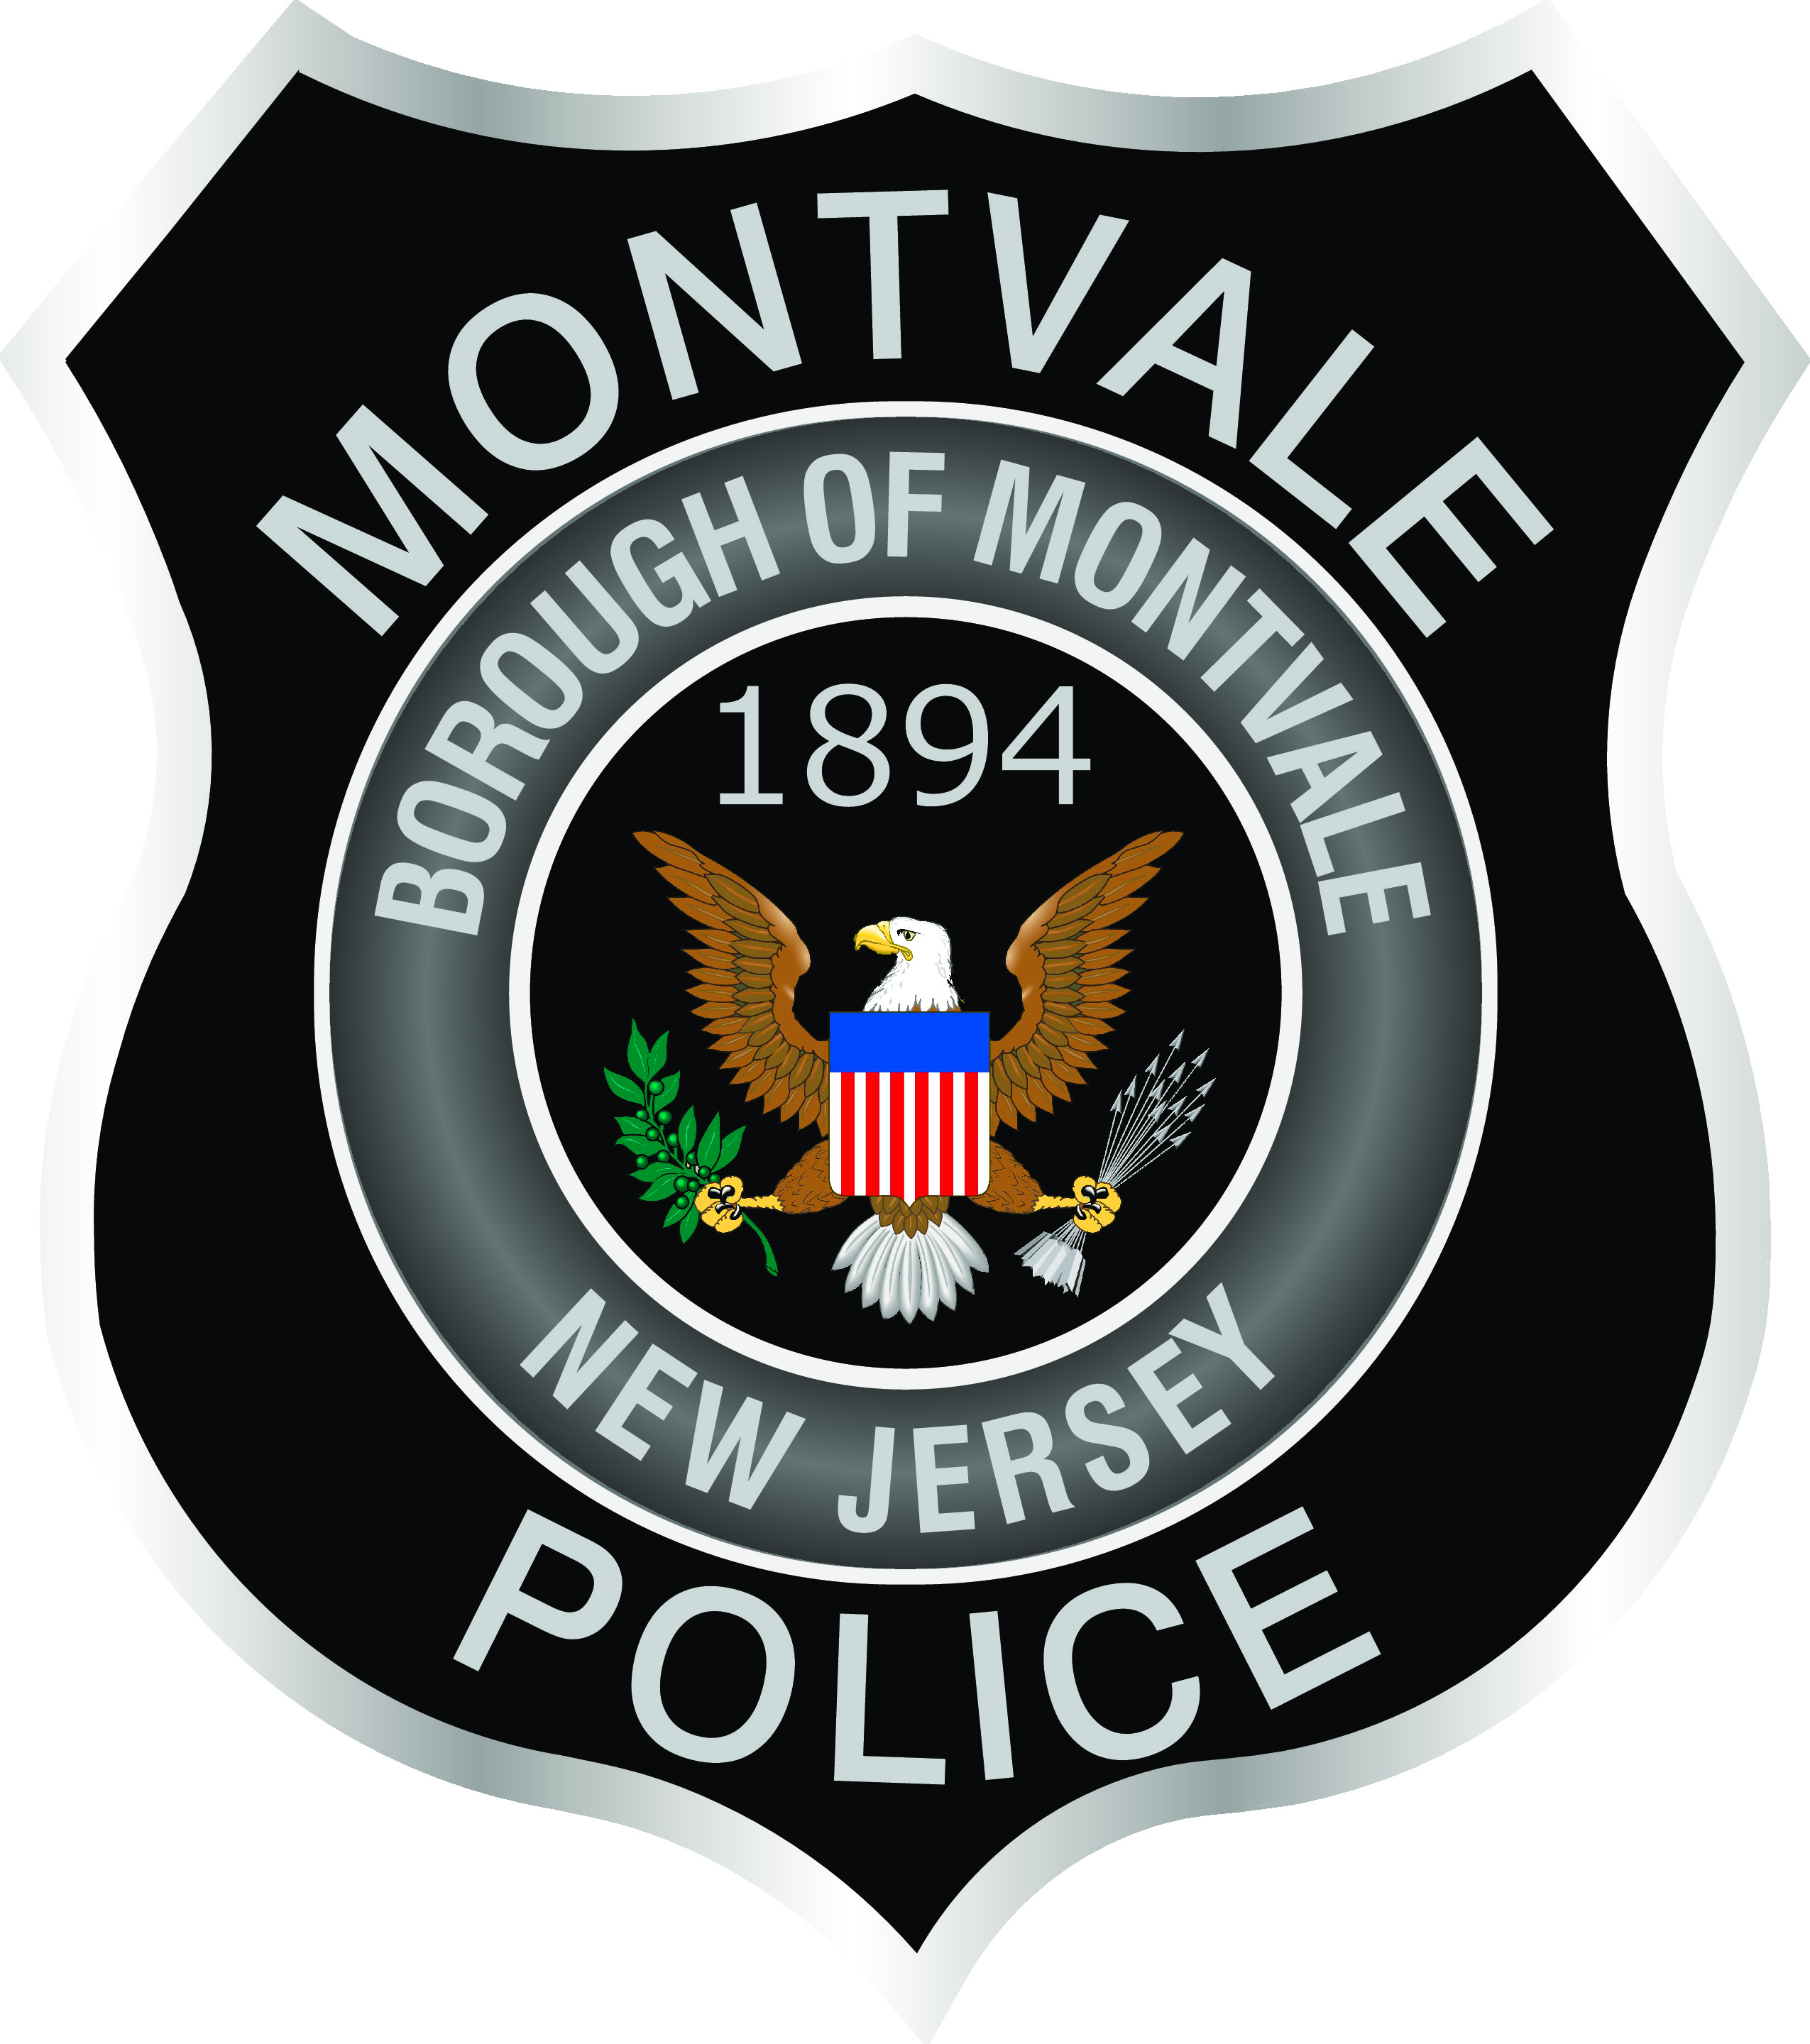 Montvale Police Department, NJ Public Safety Jobs